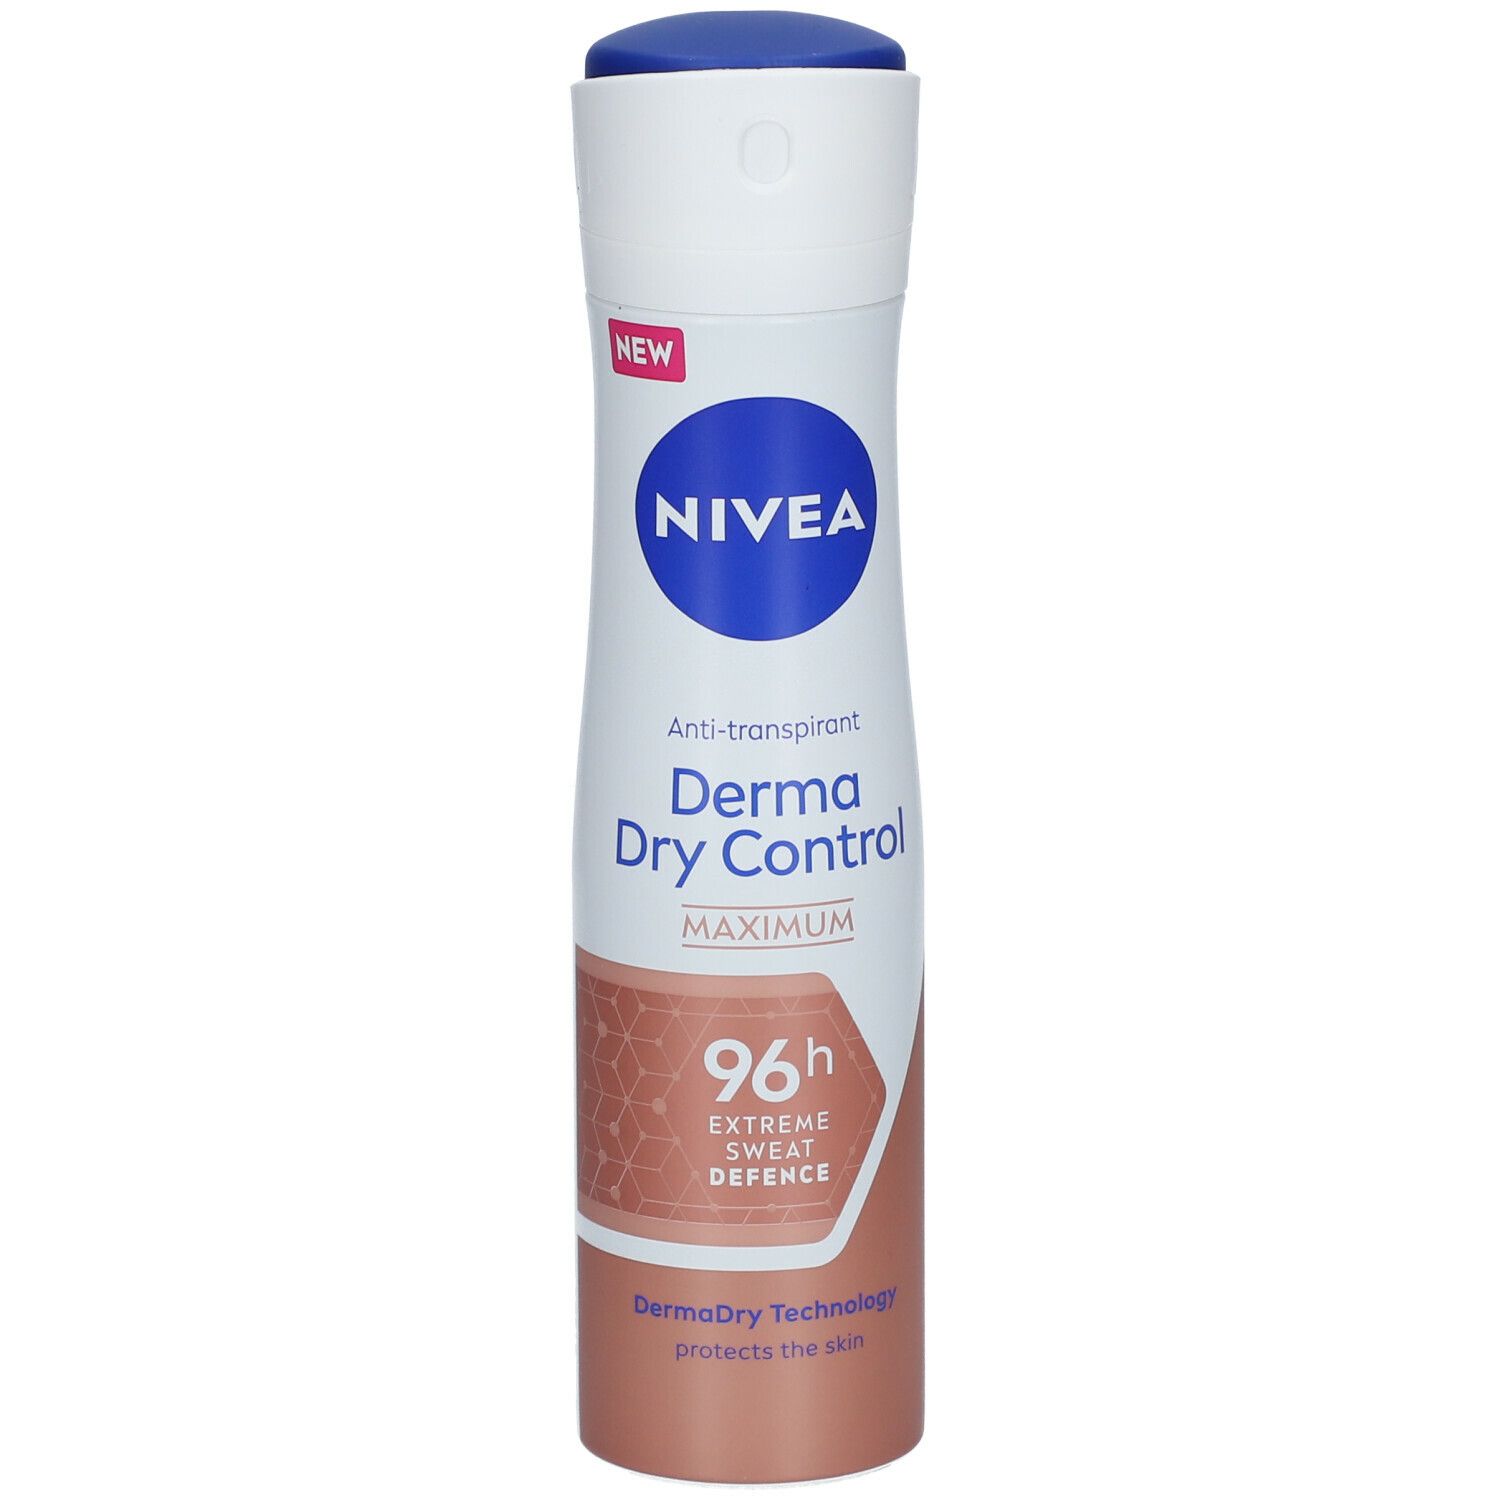 Nivea Derma Dry Control Maximum Anti-transpirant 96 h